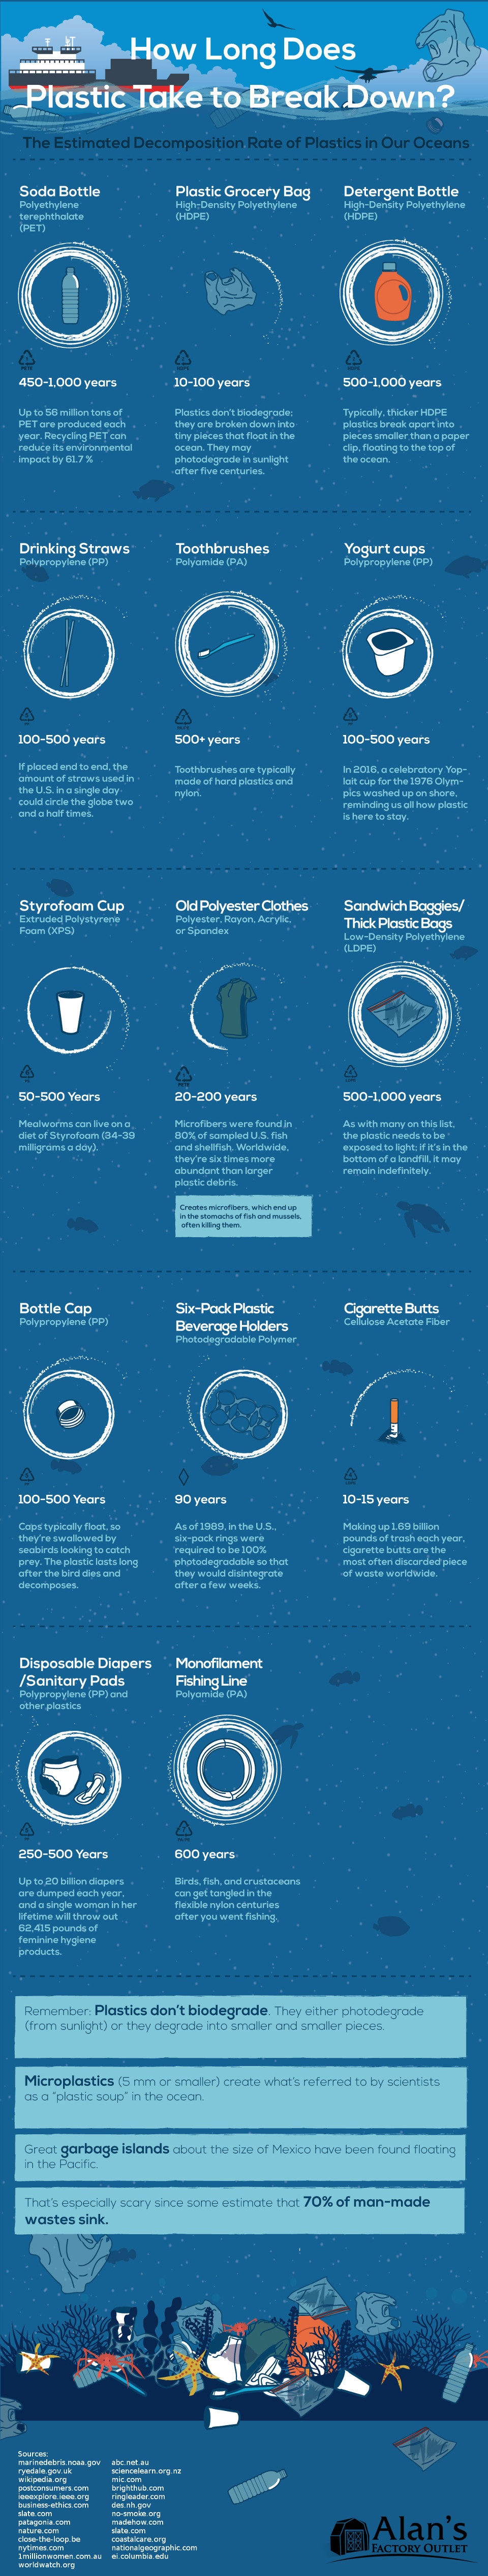 How Long Does It Take Plastic To Break Down In The Ocean?